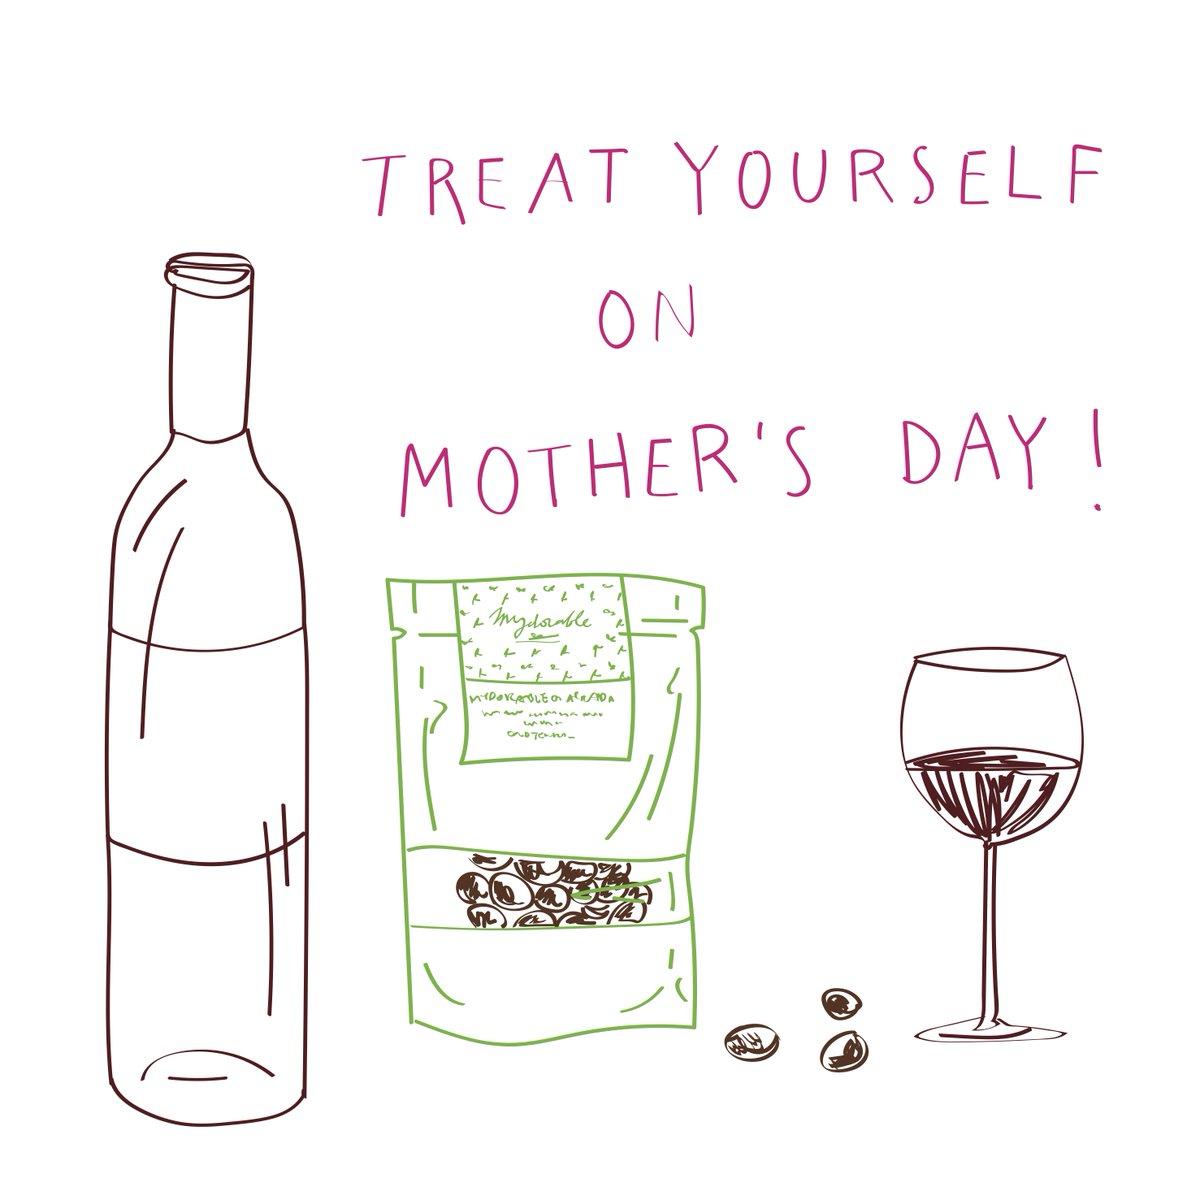 Make sure you've got all you need for Sunday ;)
#mydorable
#chocolate #mummy #happymothersday #treatyourself #wine #wineandchocolate #winepairing #rum #rumchocolate #truffles #mother #happyday

ow.ly/CHEE30irsJF